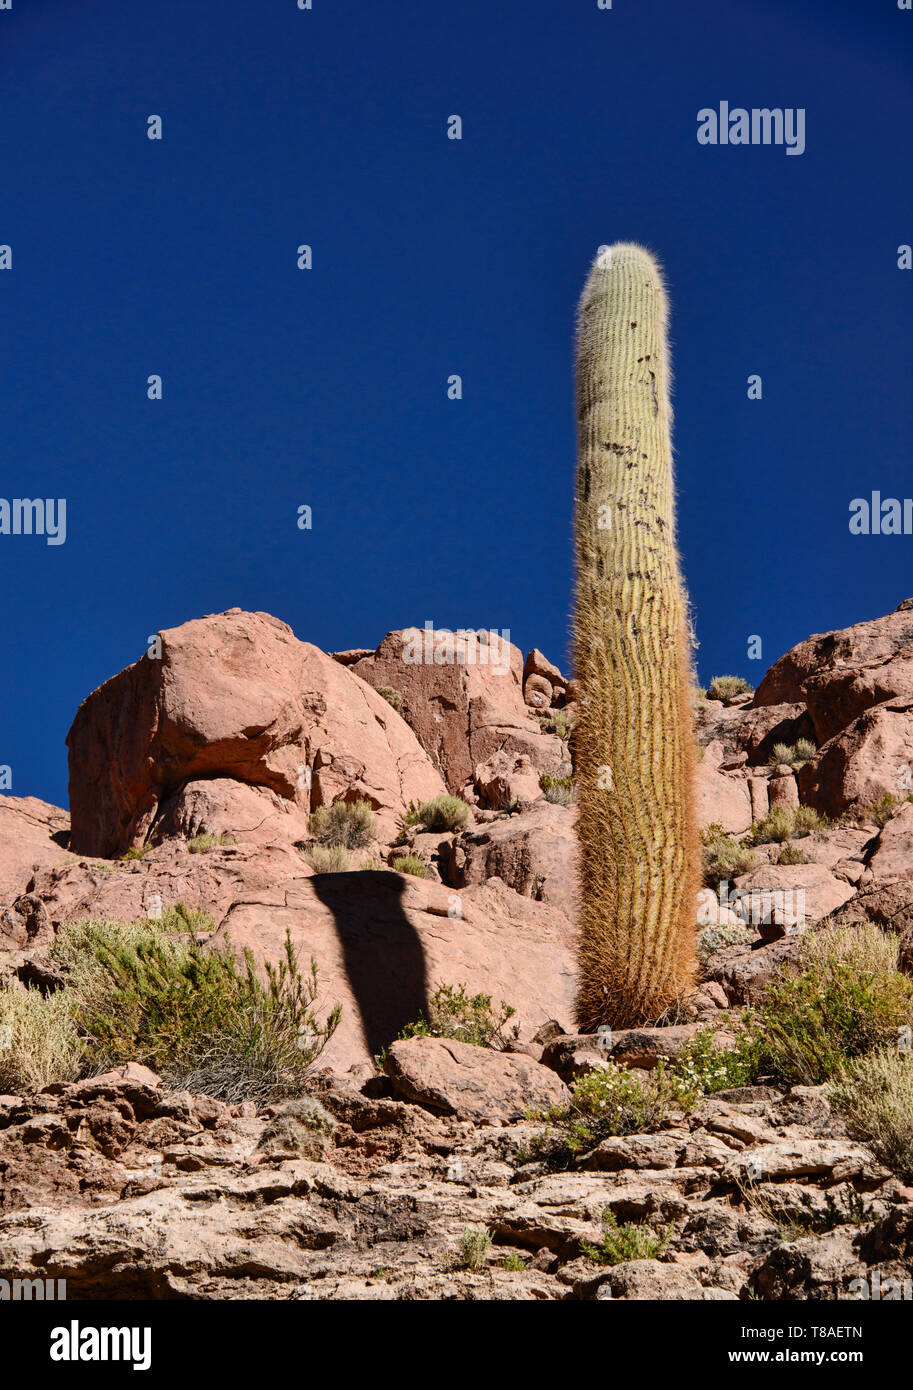 Cardon cactus, il Deserto di Atacama, Cile Foto Stock